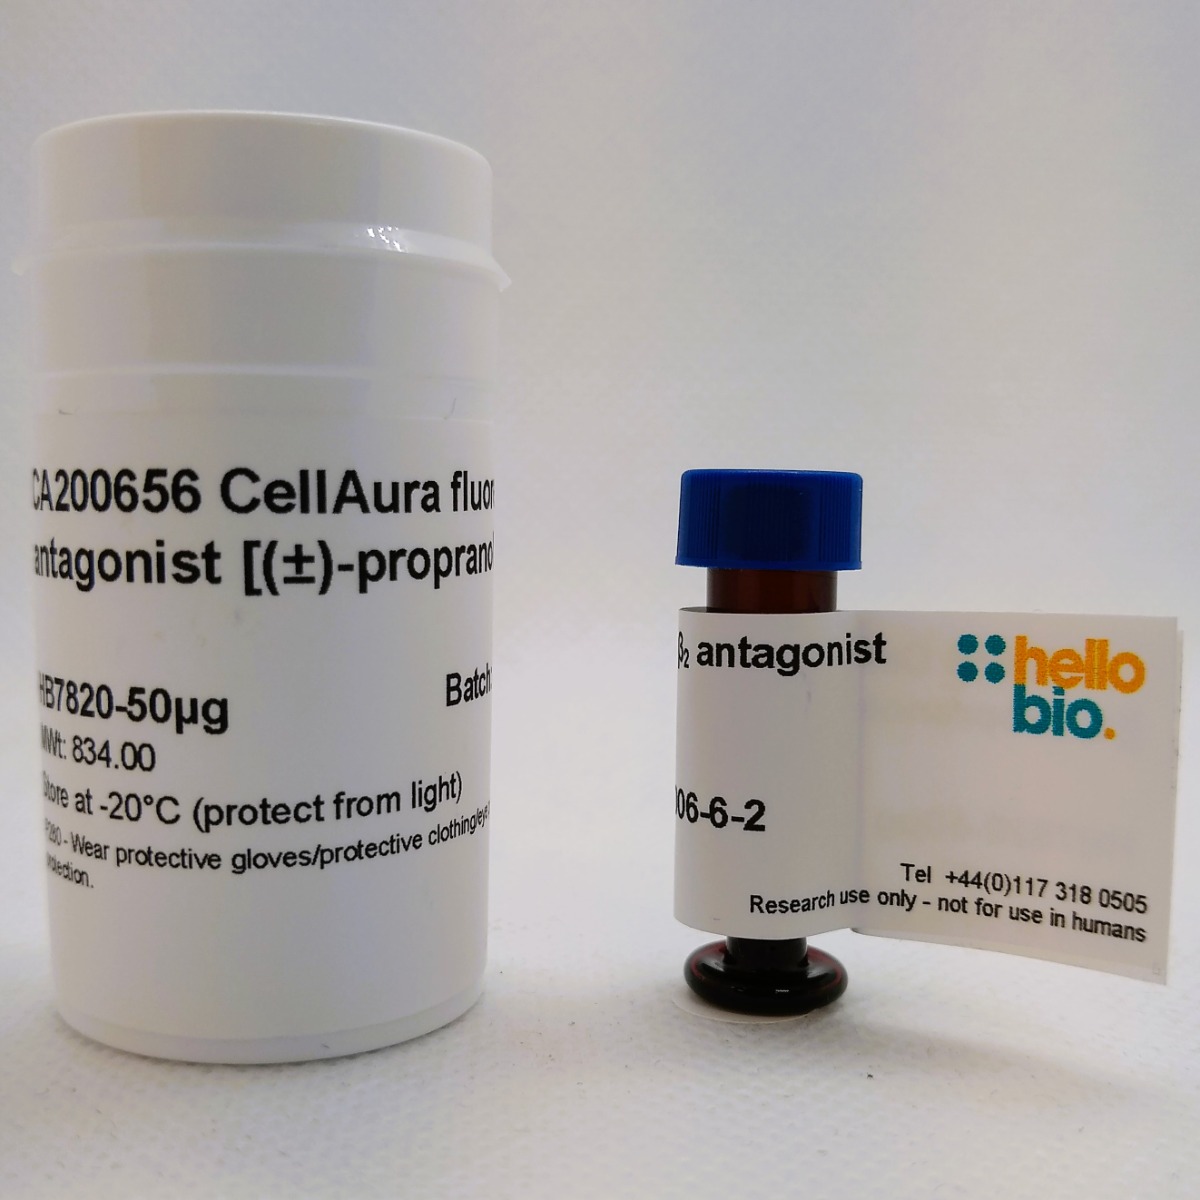 CellAura fluorescent β2 antagonist [(±)-propranolol] product vial image | Hello Bio